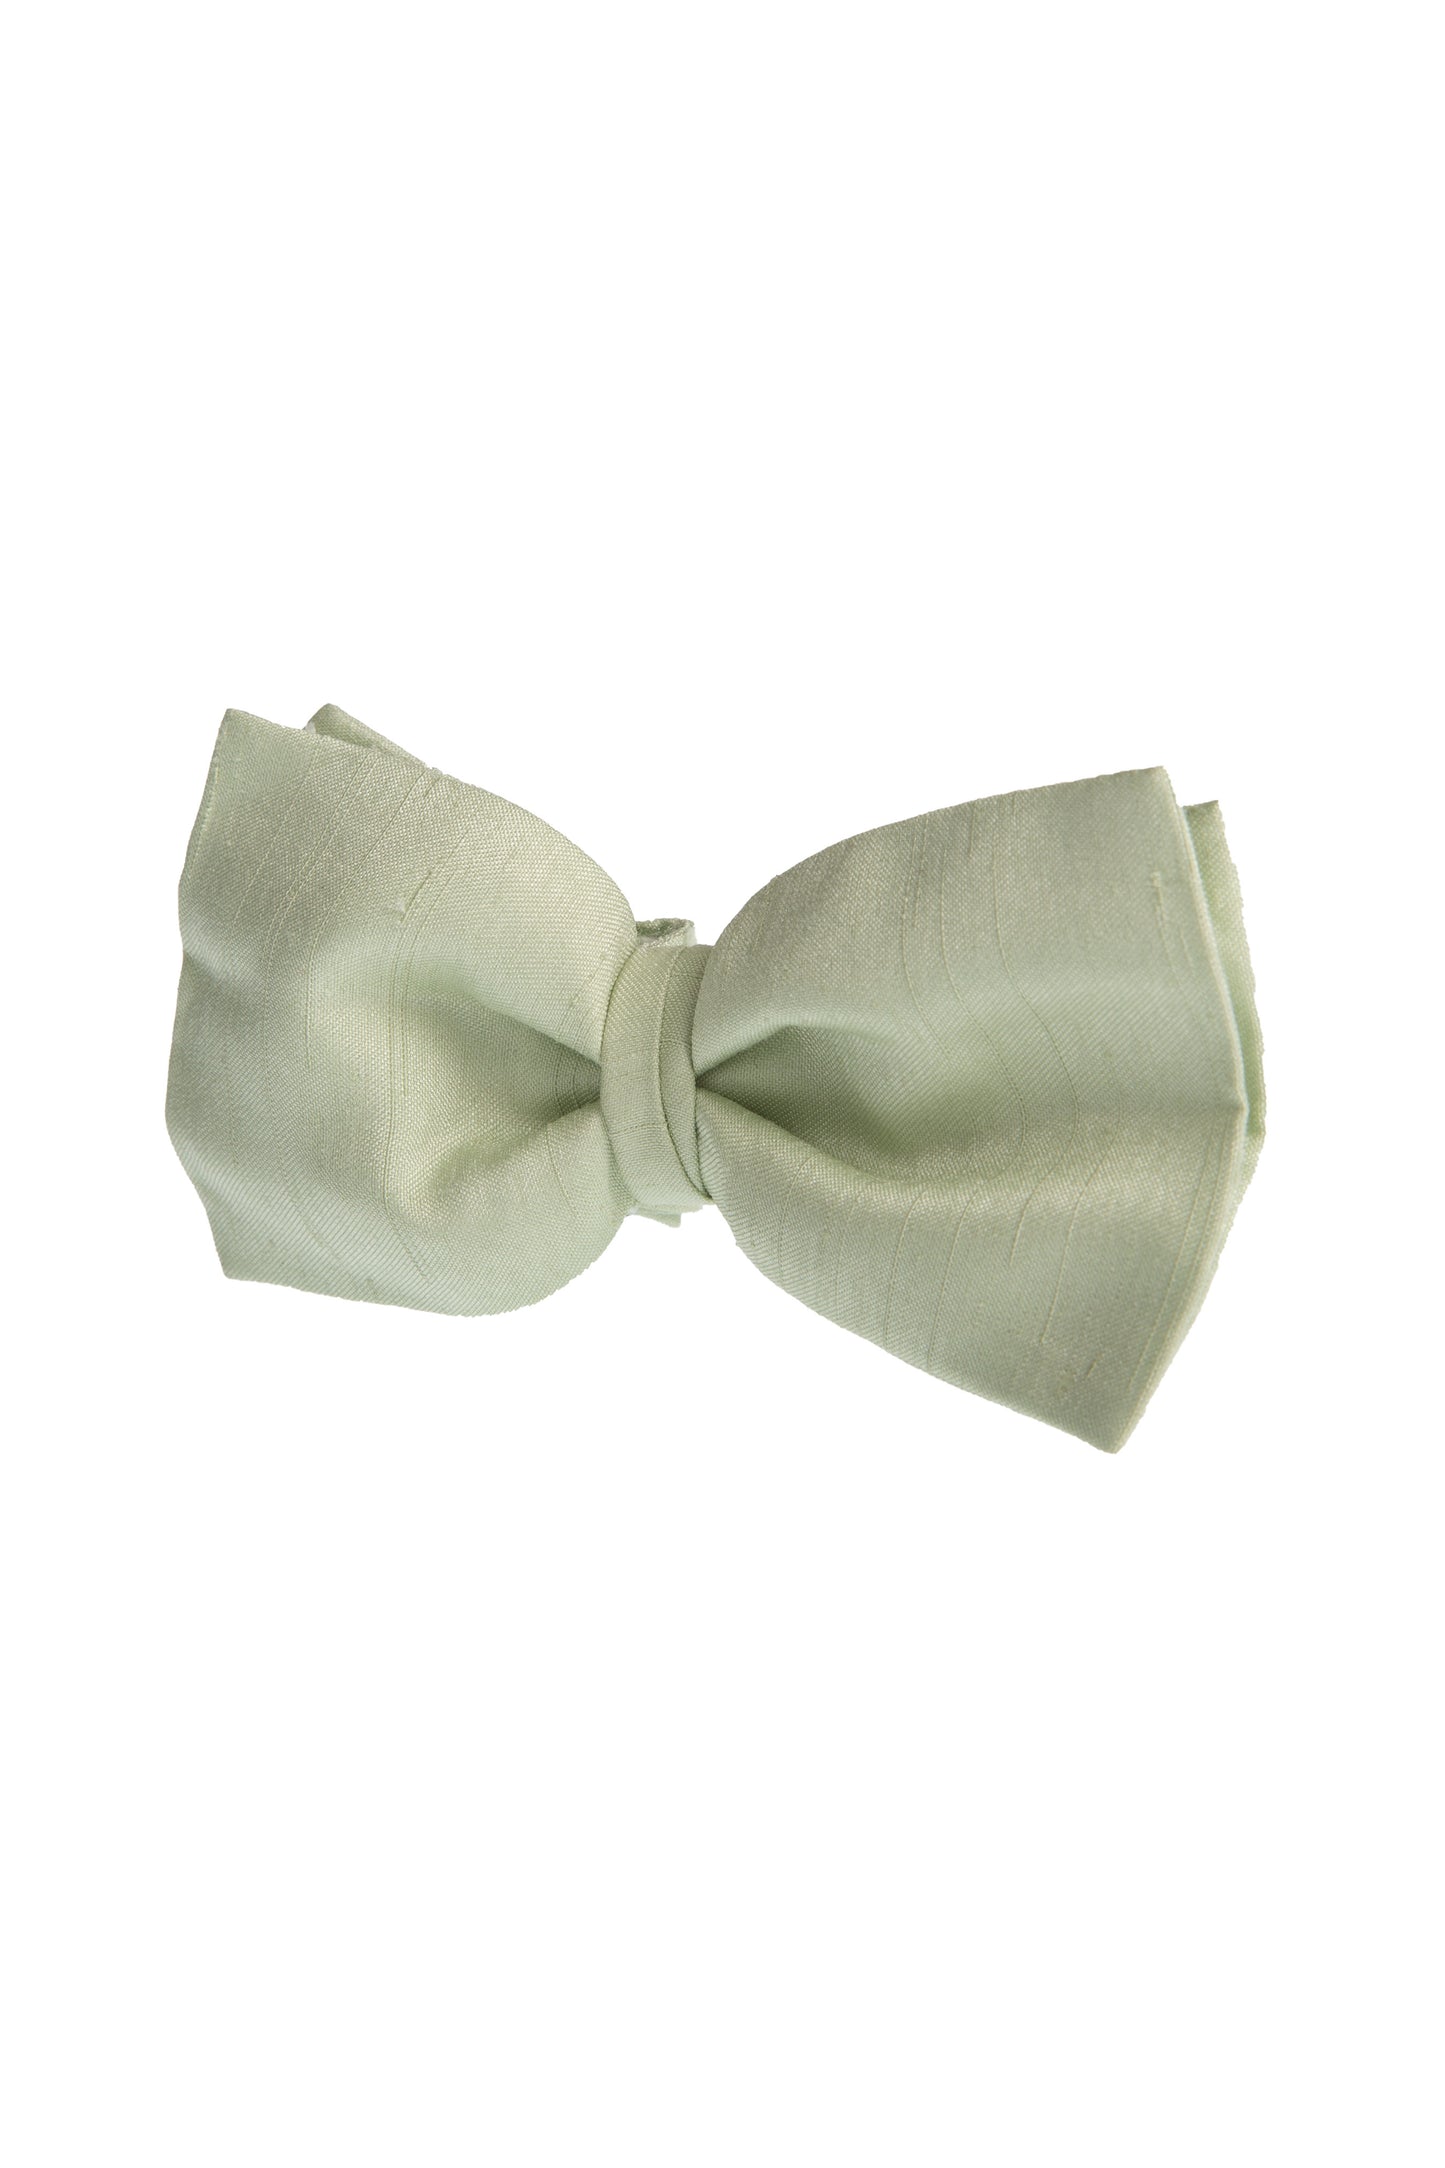 Mint Green Bow Tie - Brand New